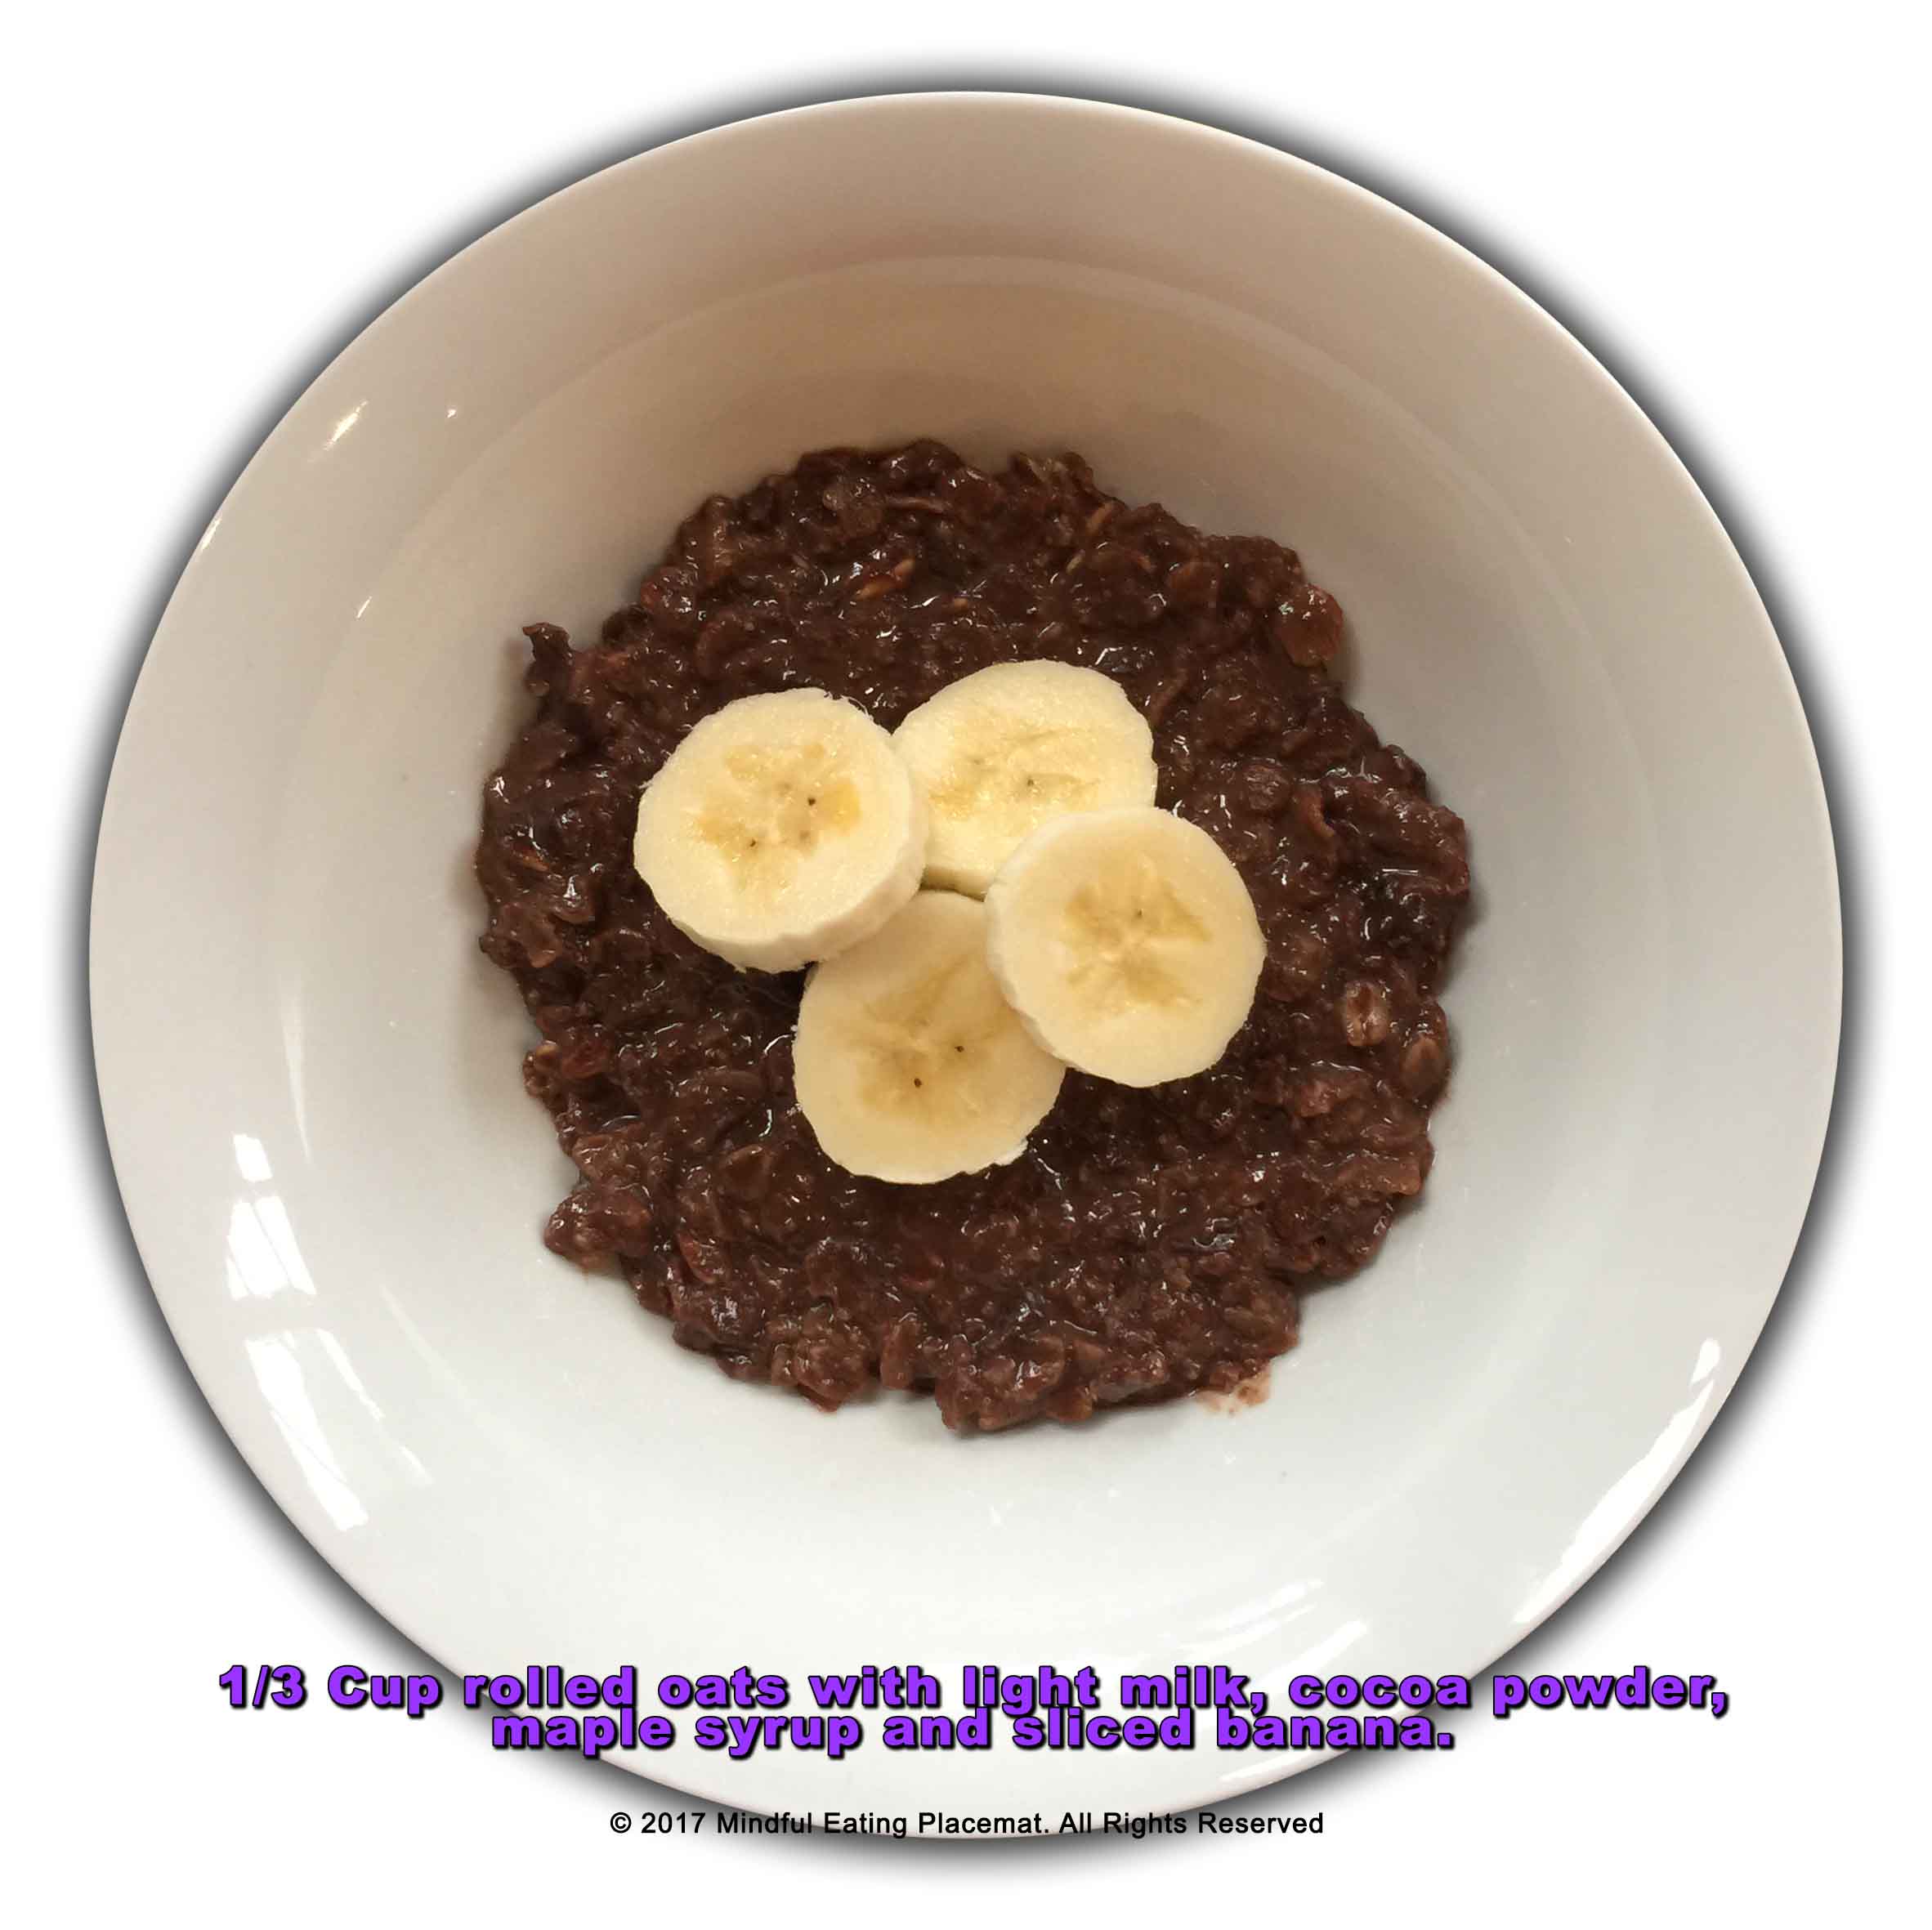 Chocolate porridge with banana